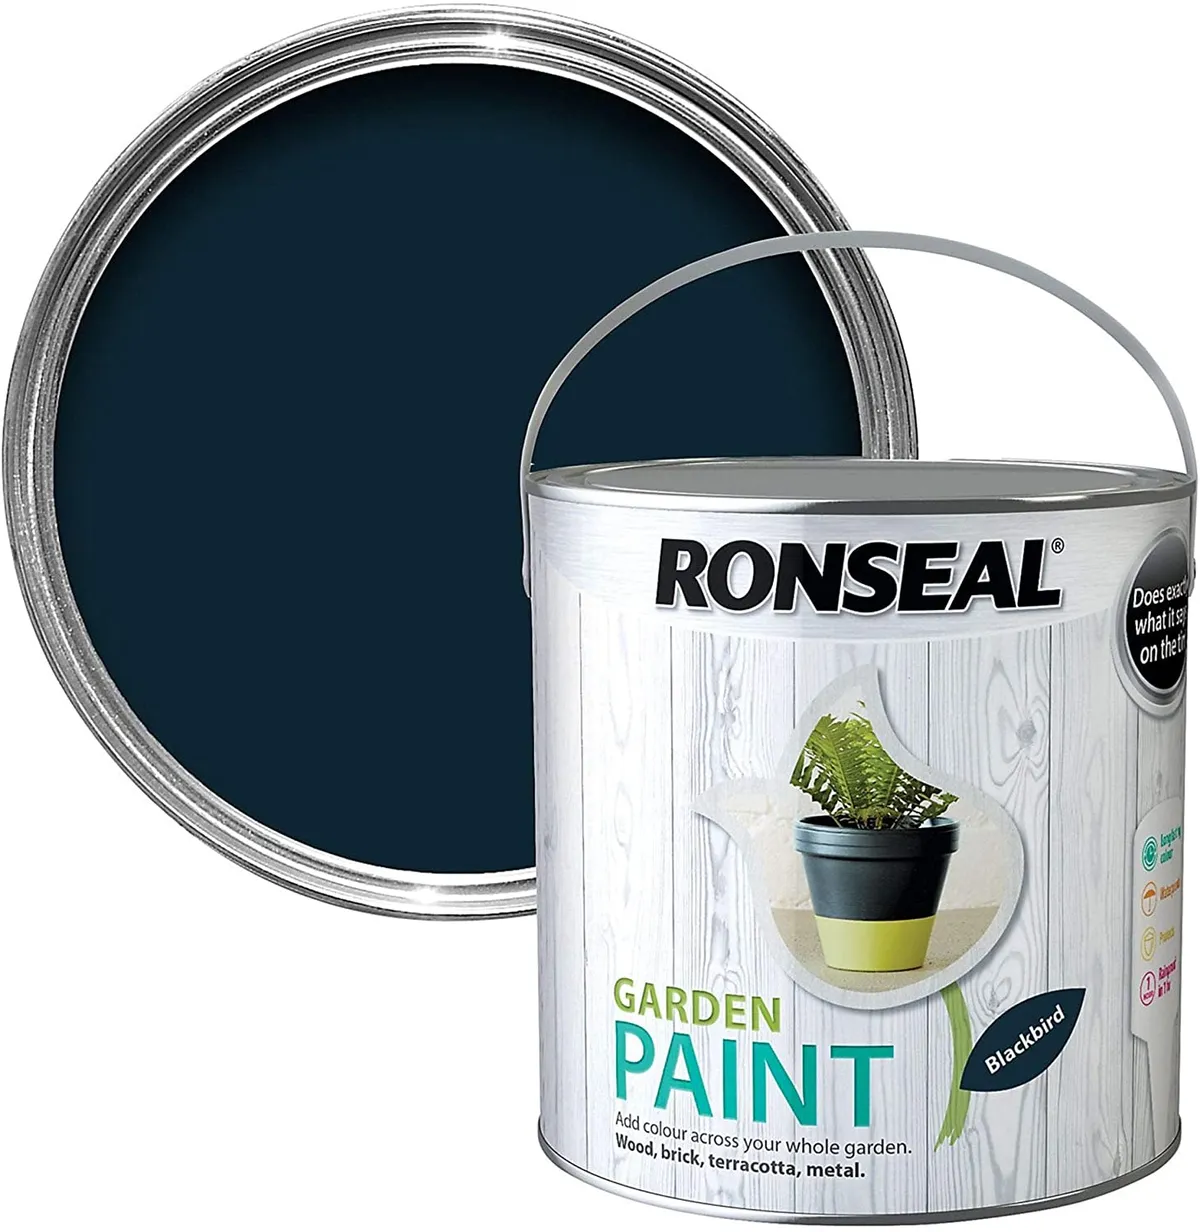 Ronseal Garden Paint Black Bird